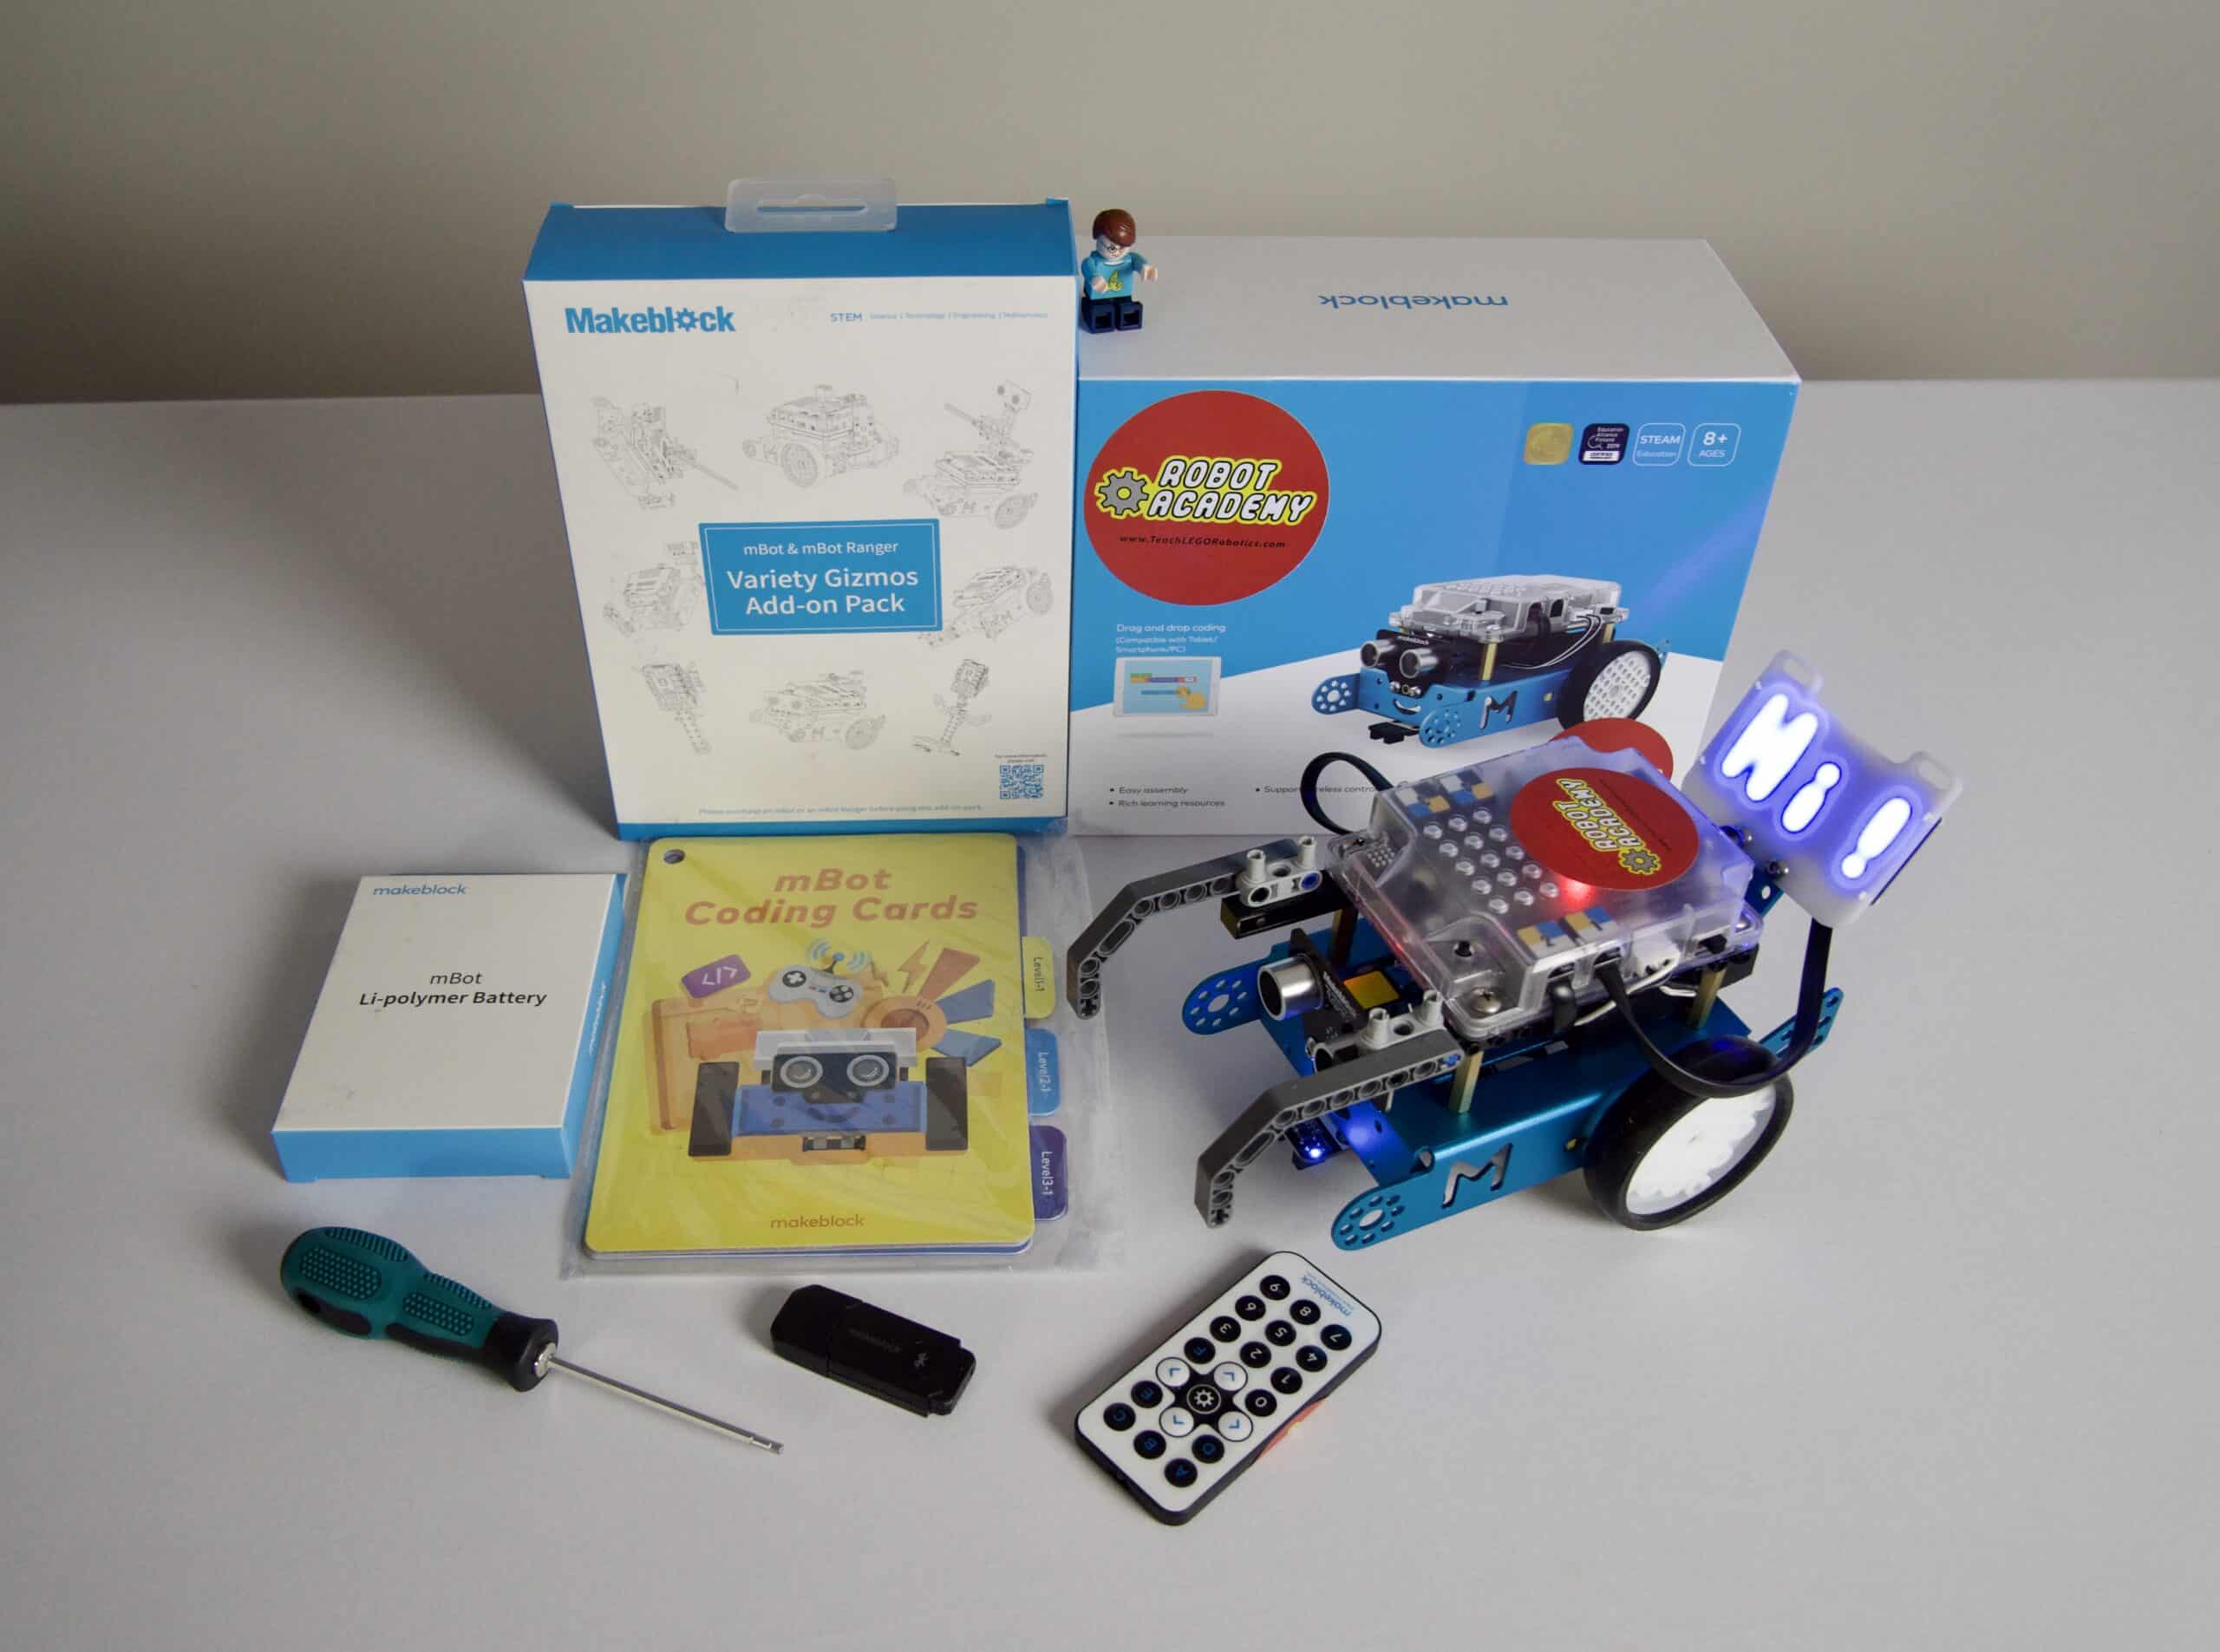 CYBER MONDAY BUNDLE: Robot Academy Arduino LEGO® Robot Premium Holiday Bundle with Instructional Video